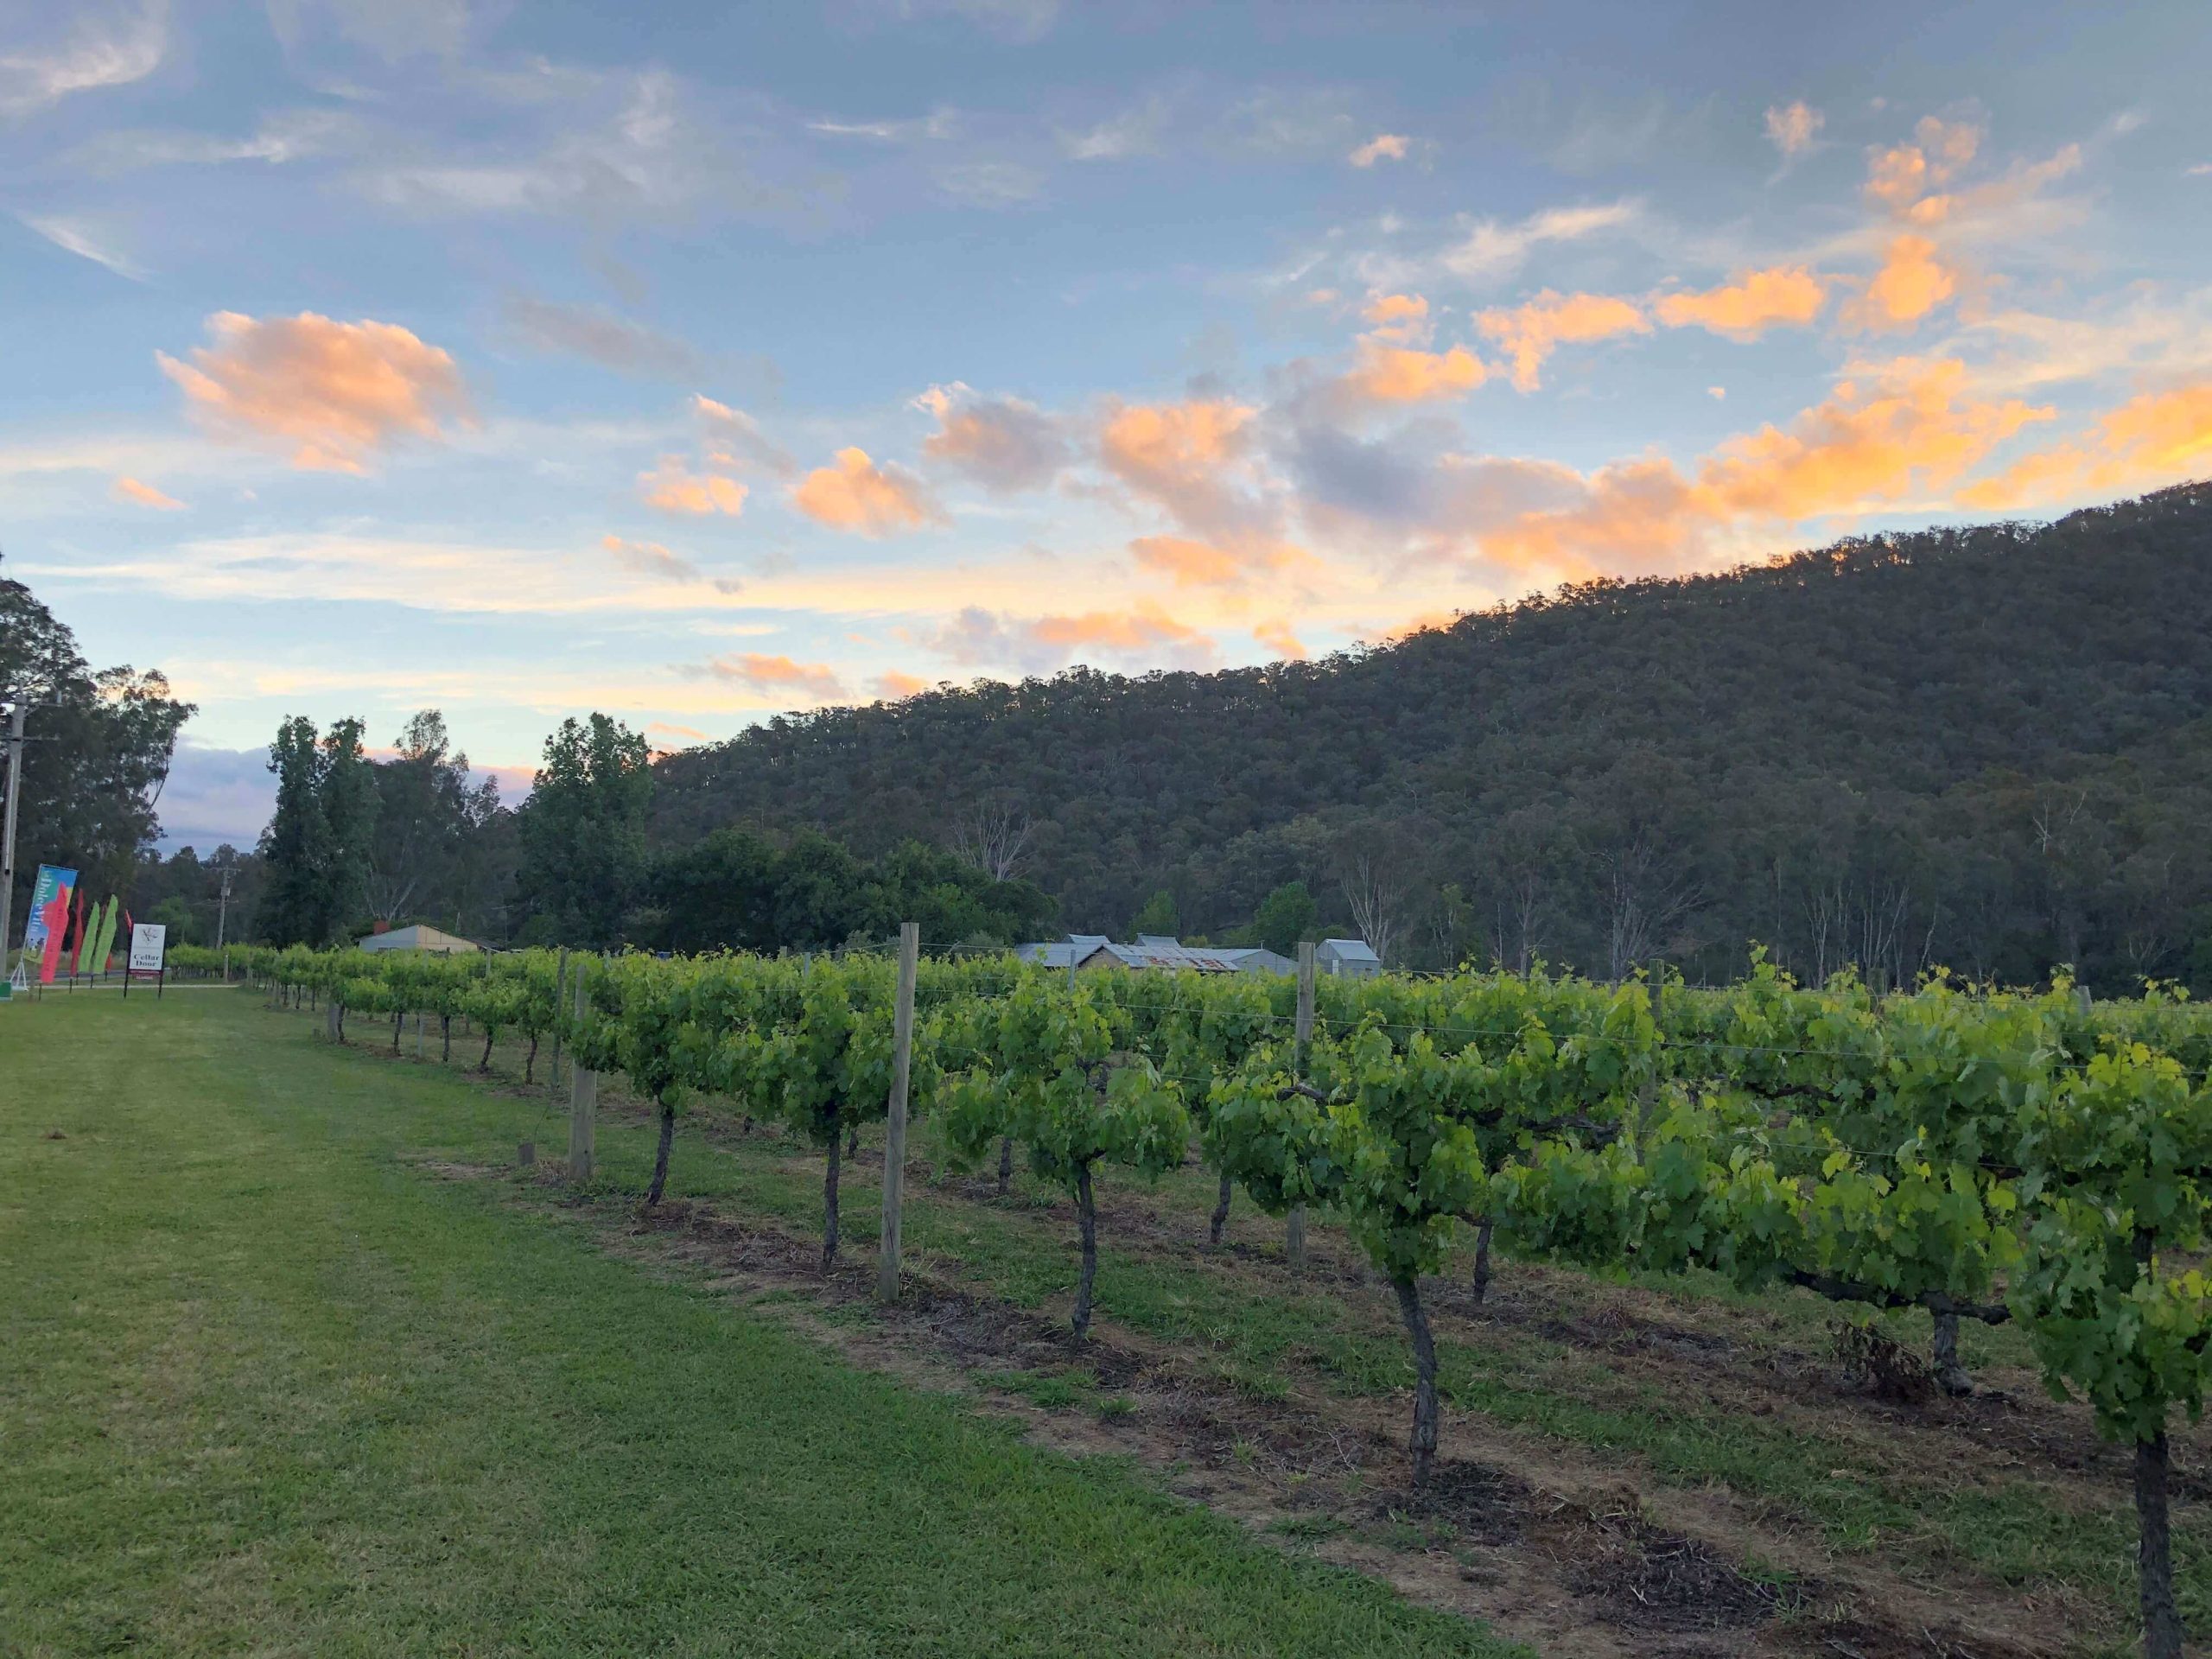 King River Estate: A Jewel in North East Victoria’s Wine Region